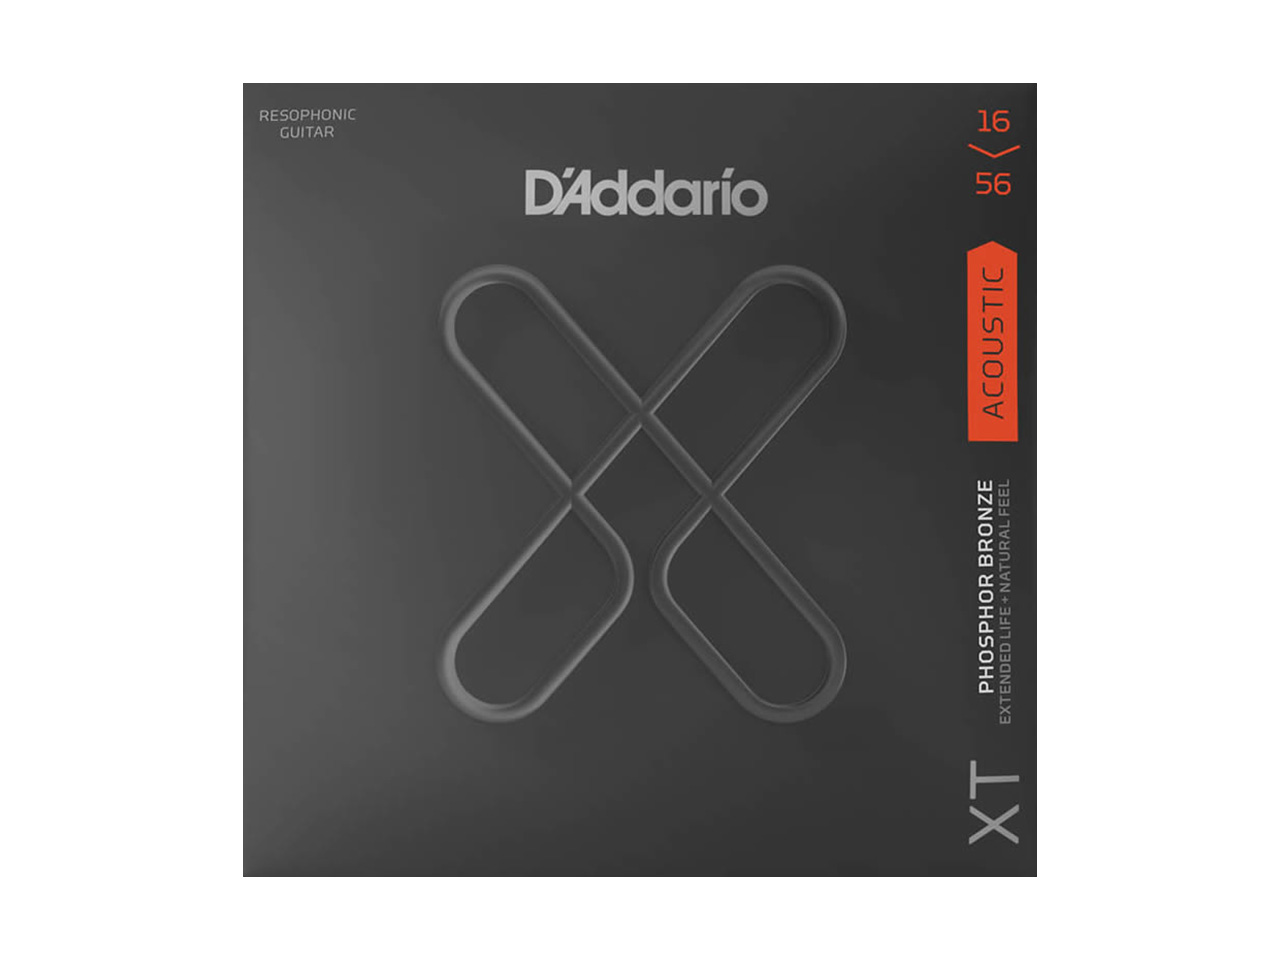 D'Addario(ダダリオ) XT ACOUSTIC PHOSPHOR BRONZE, EXTRA LIGHT / XTAPB1656 (アコースティックギター弦)